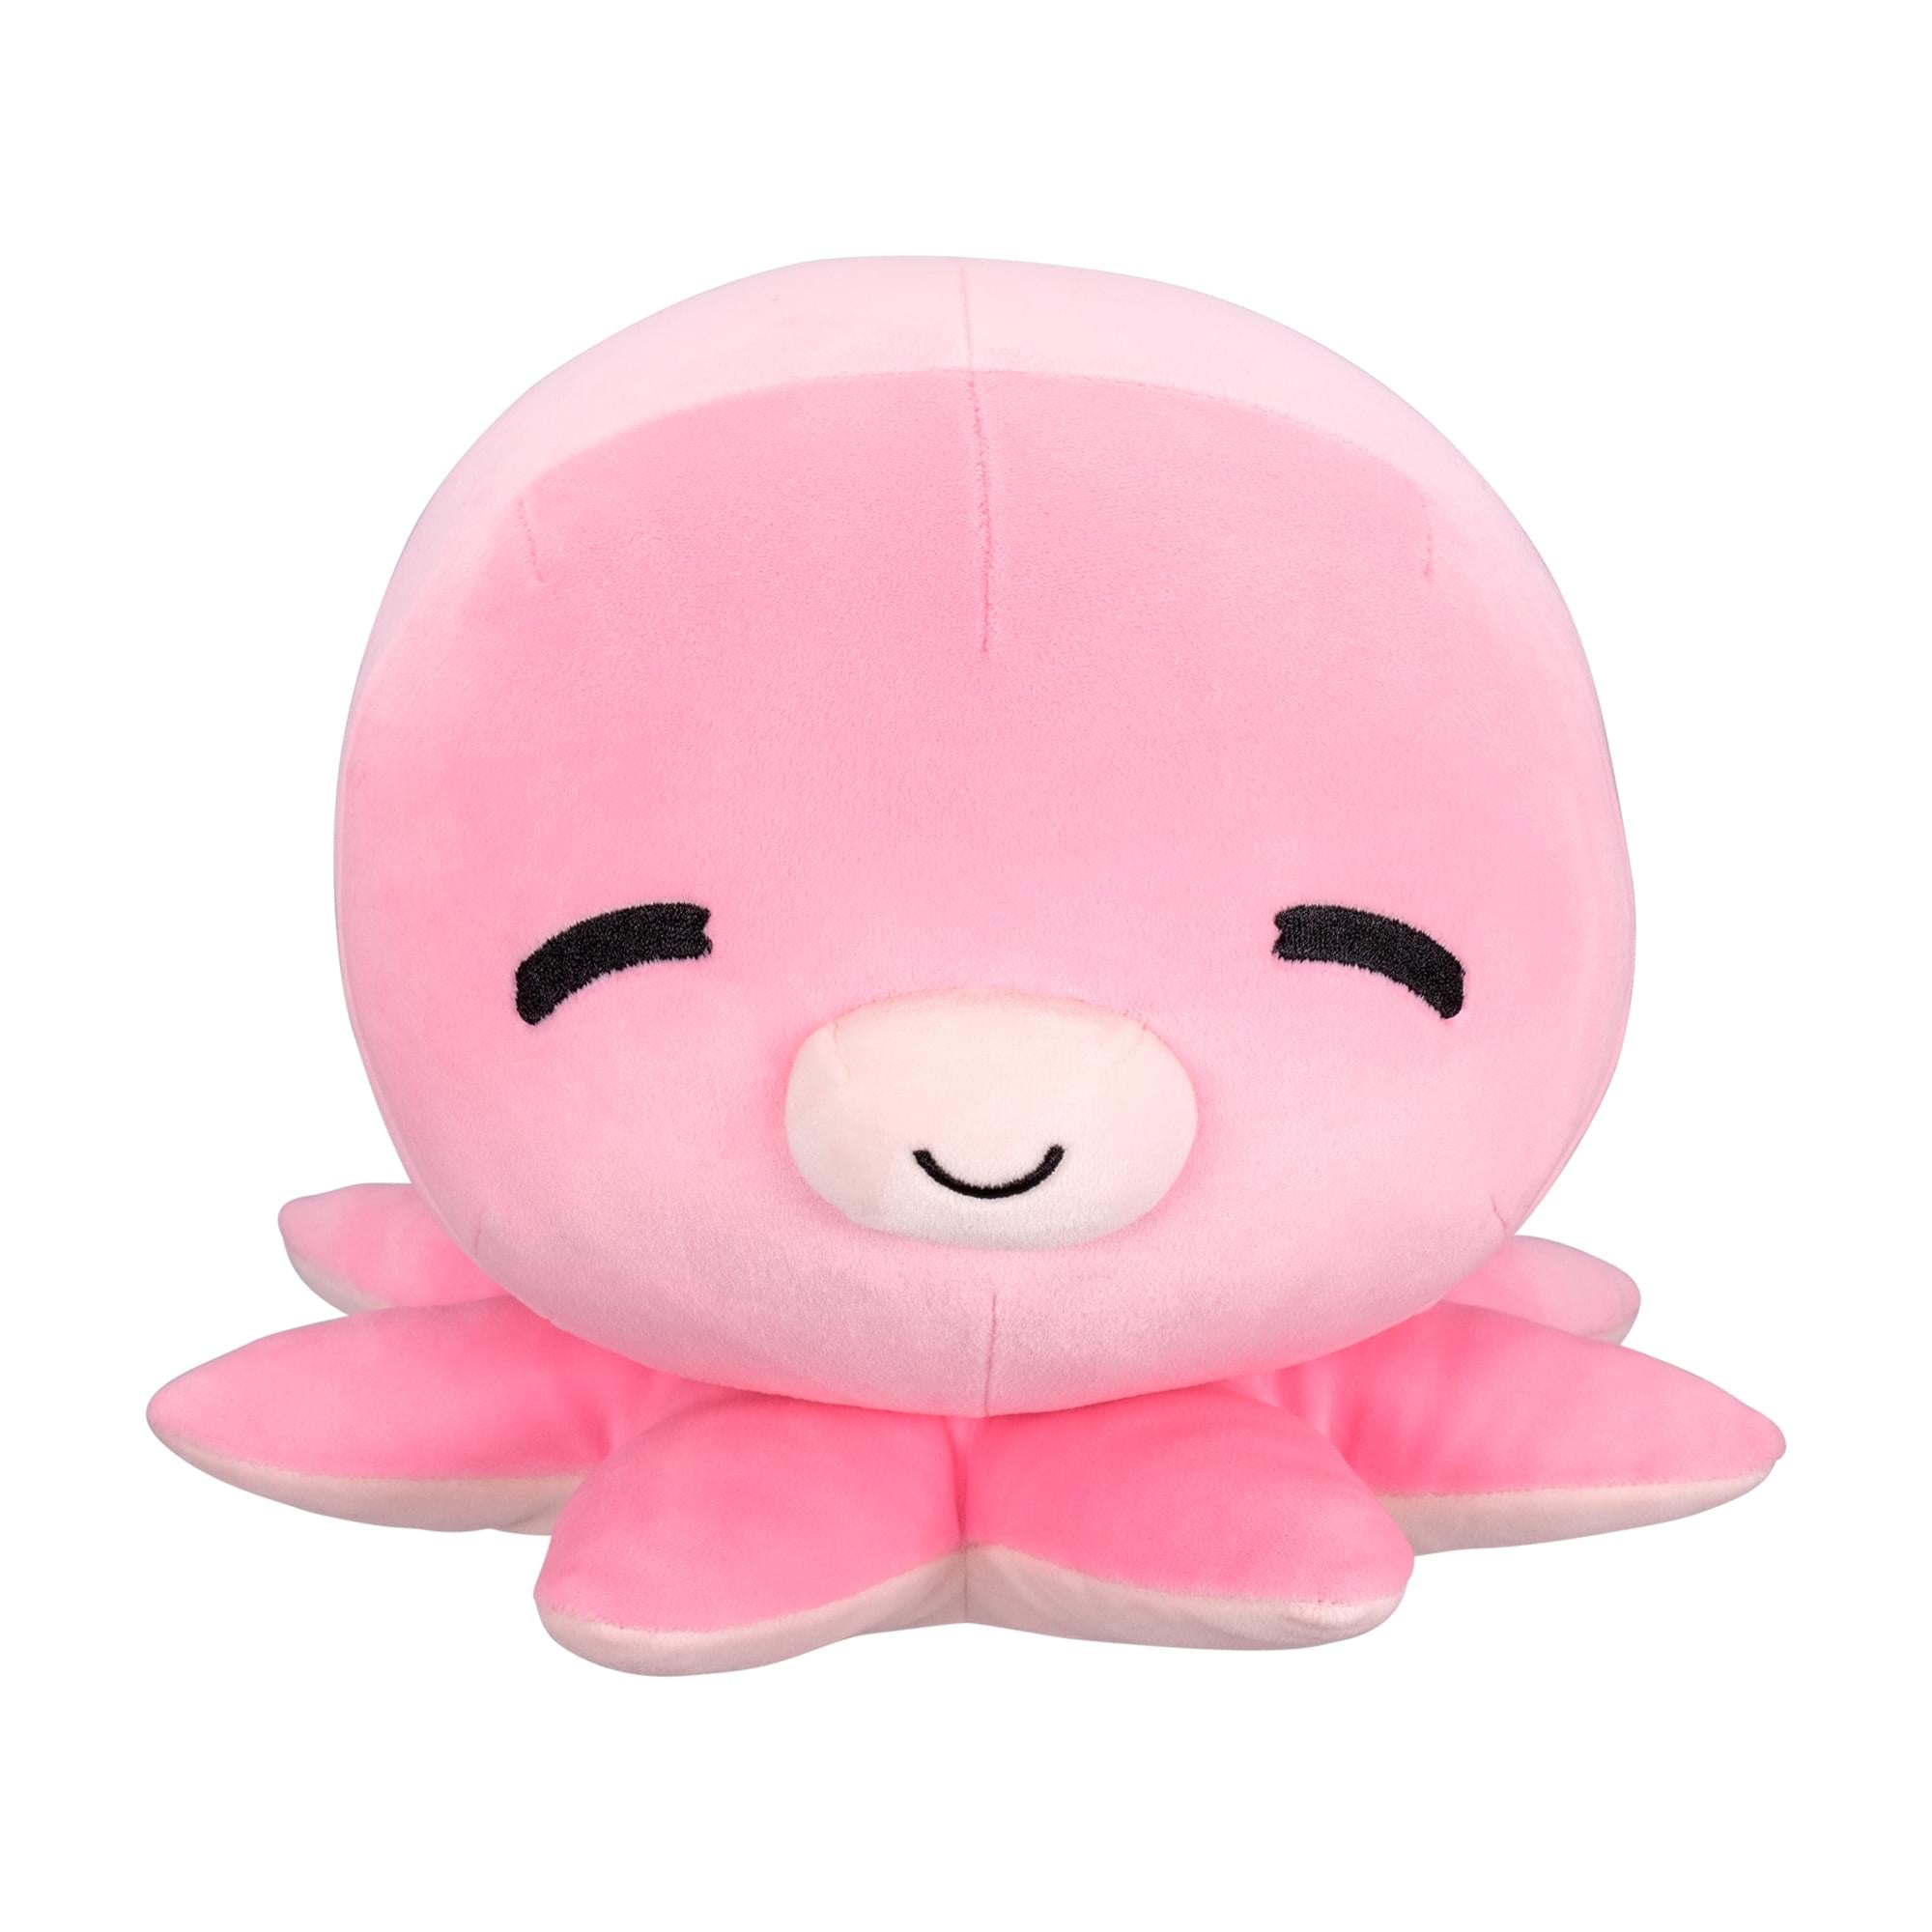 MochiOshis 12 Character Plush Toy Animal Pink Octopus , Izumi Inkyoshi